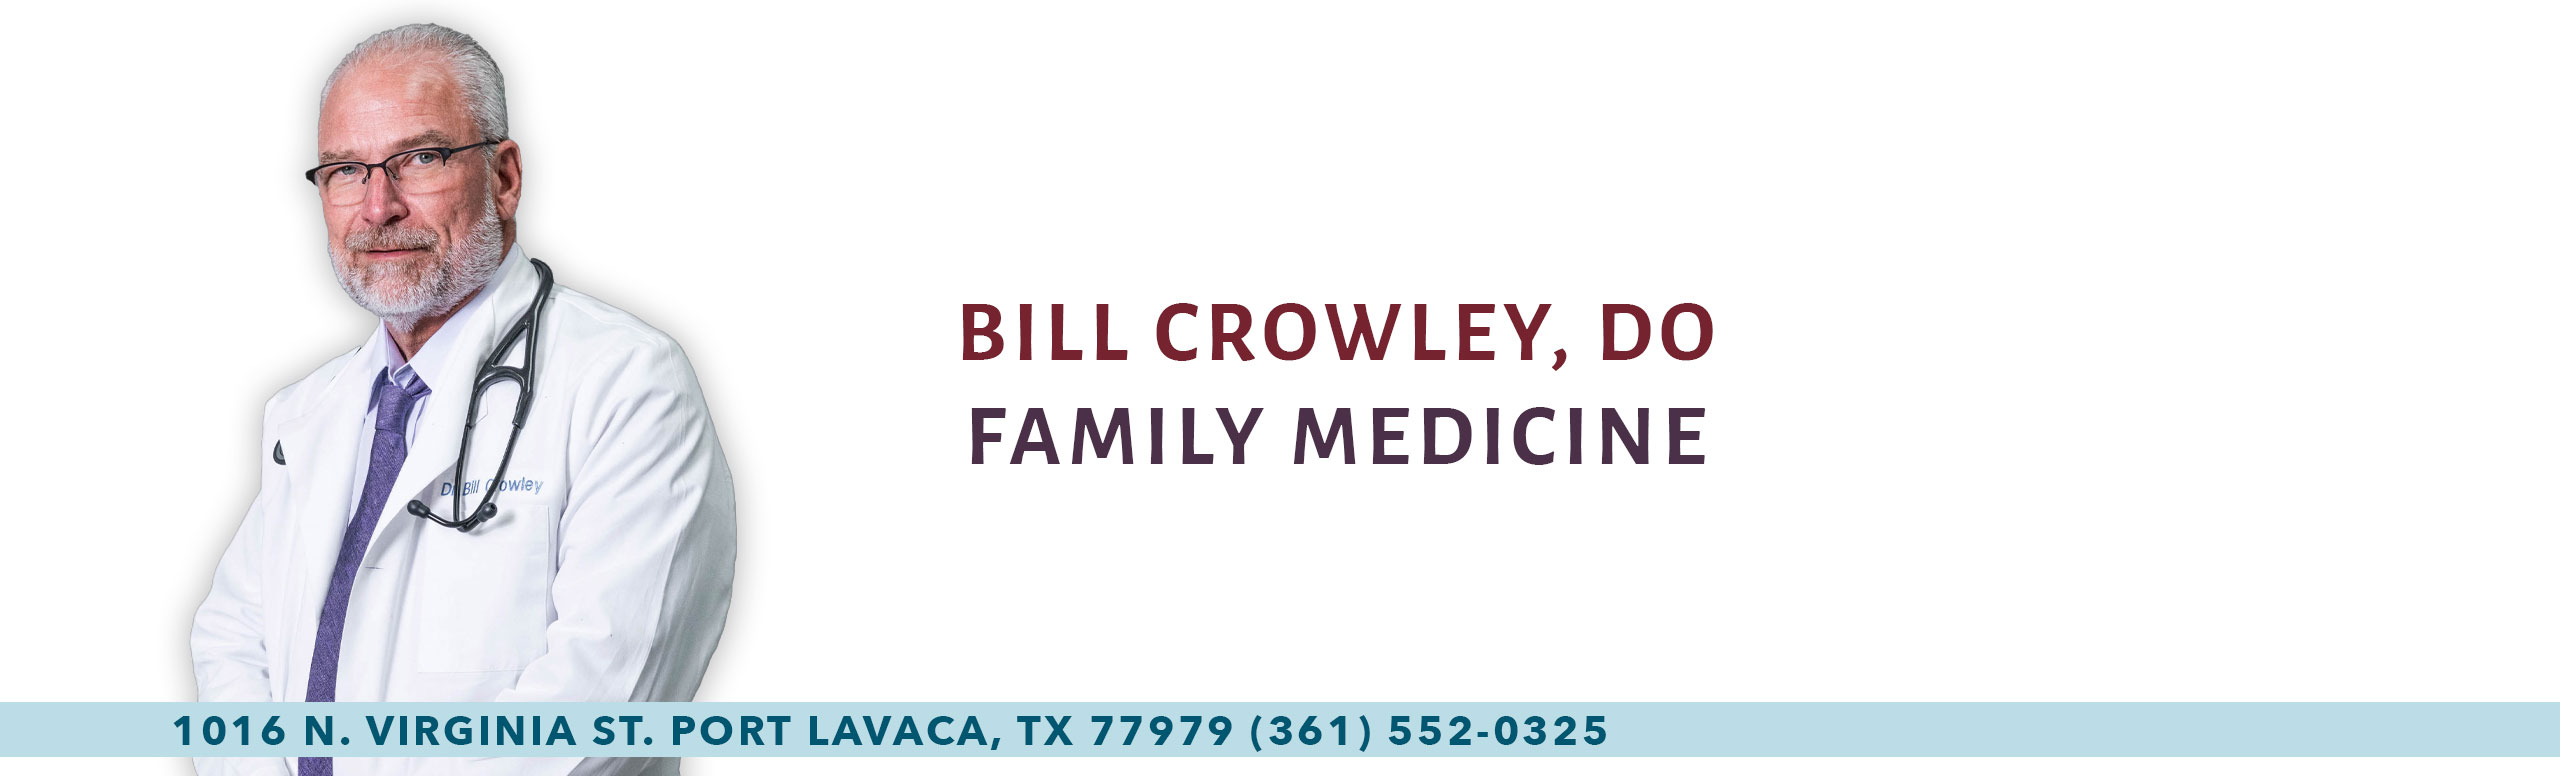 Bill Crowley, DO Family Medicine